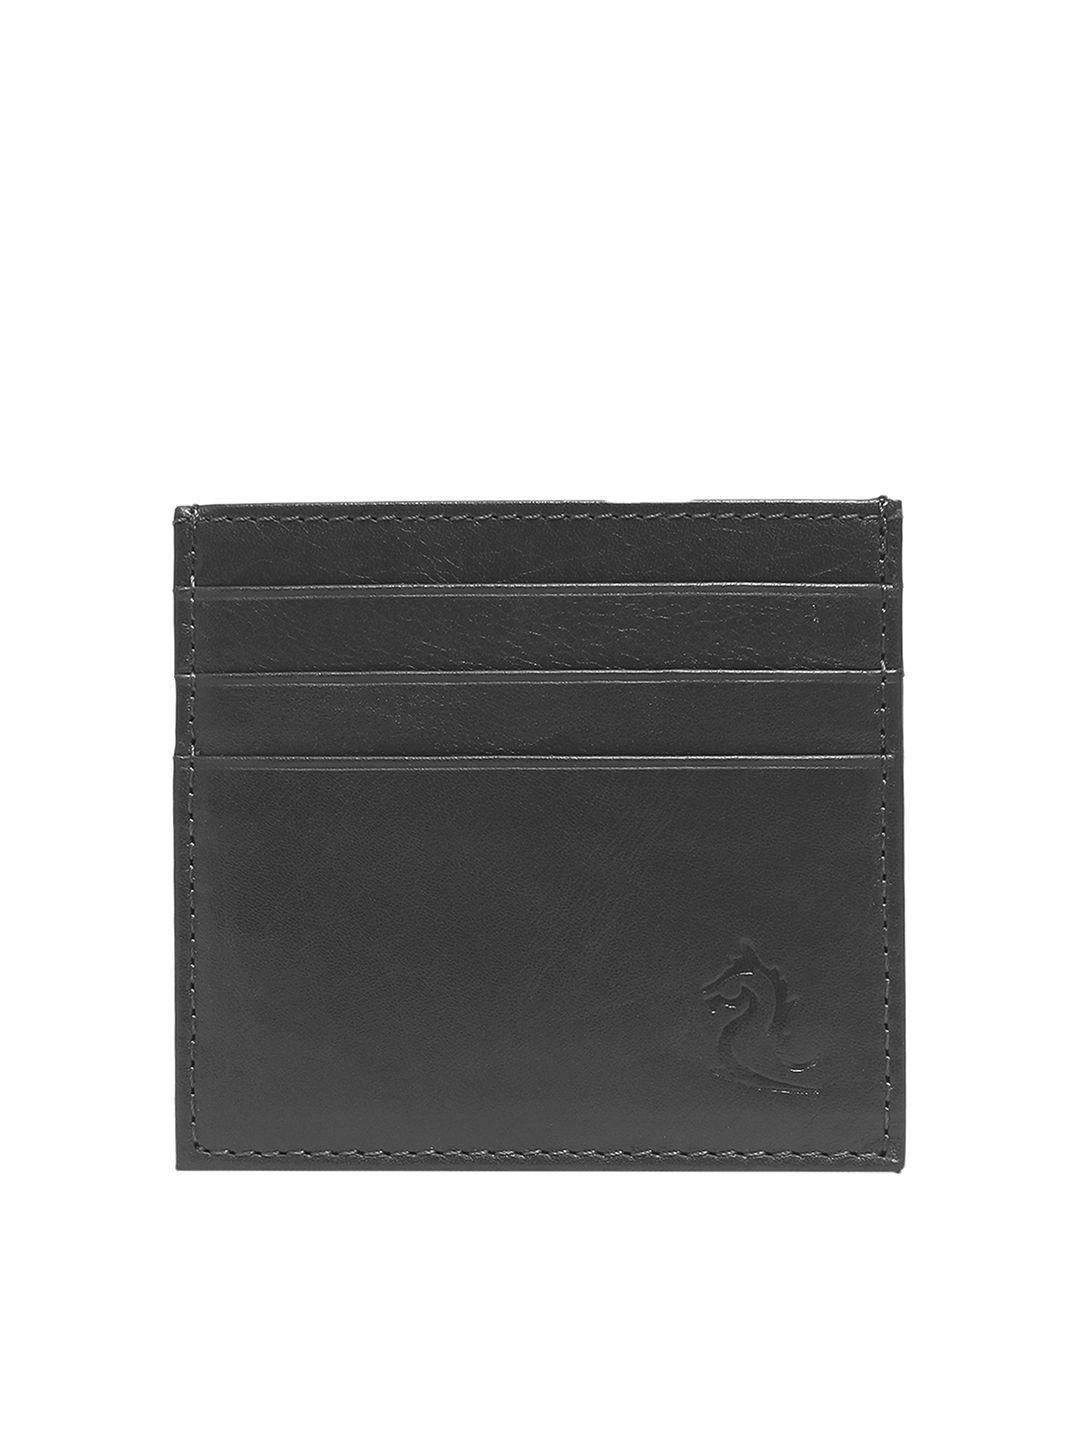 kara unisex black genuine leather card holder